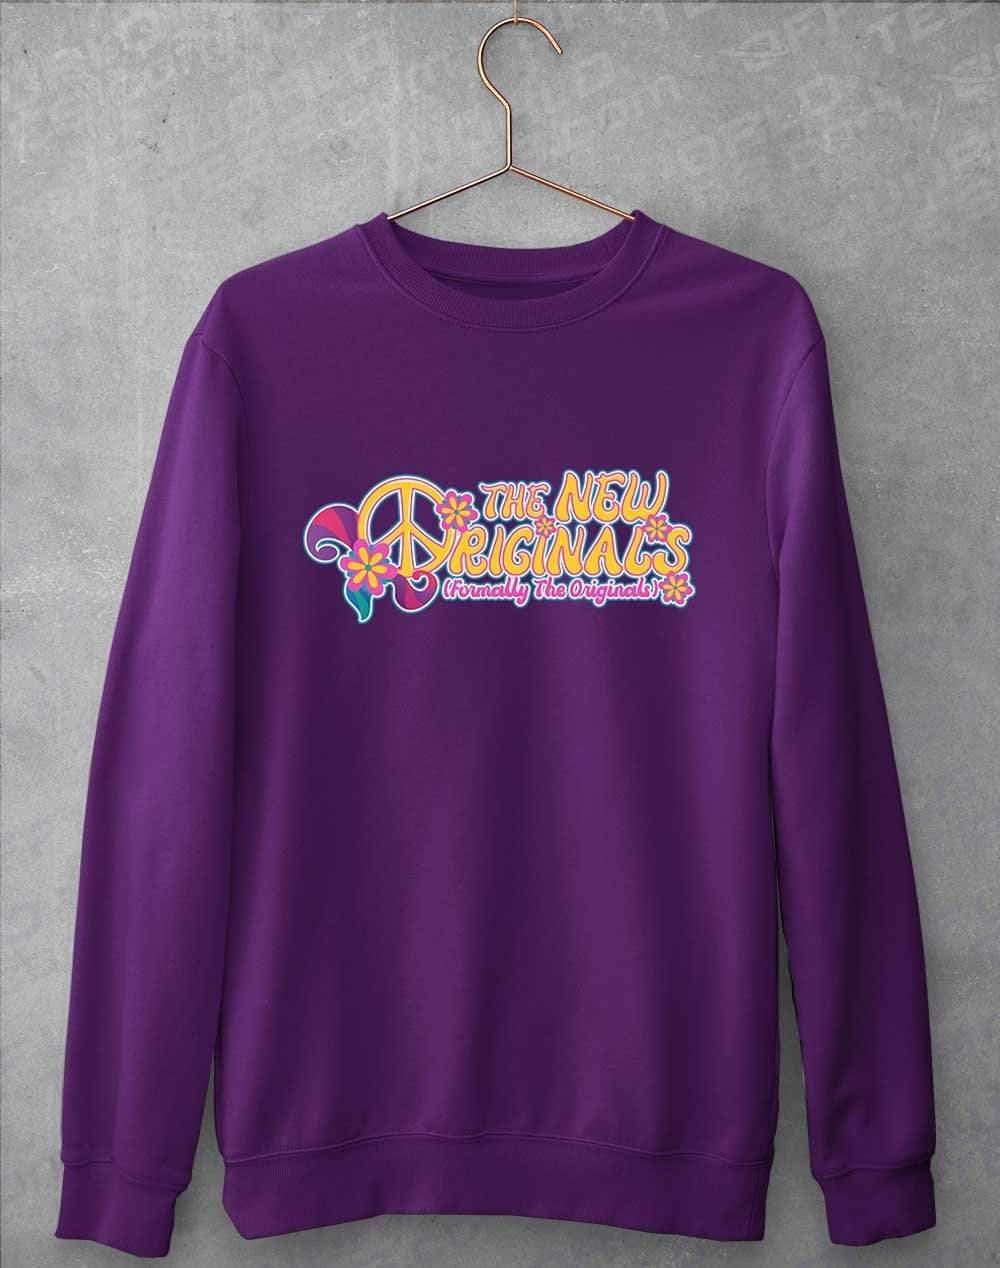 The New Originals Sweatshirt S / Purple  - Off World Tees